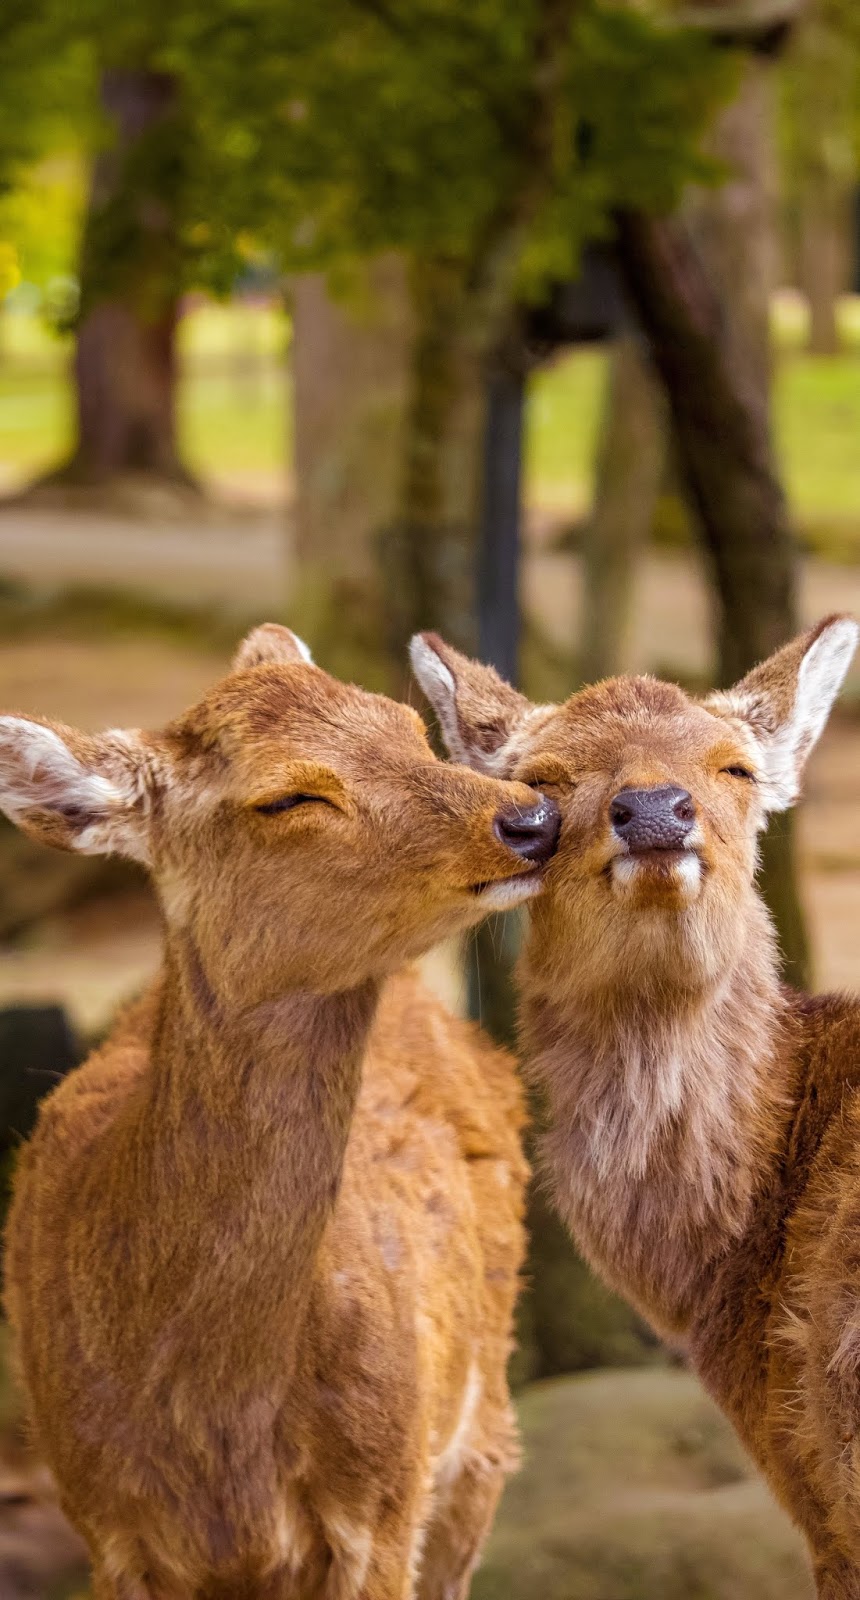 Cute pair of deer displaying their affection.